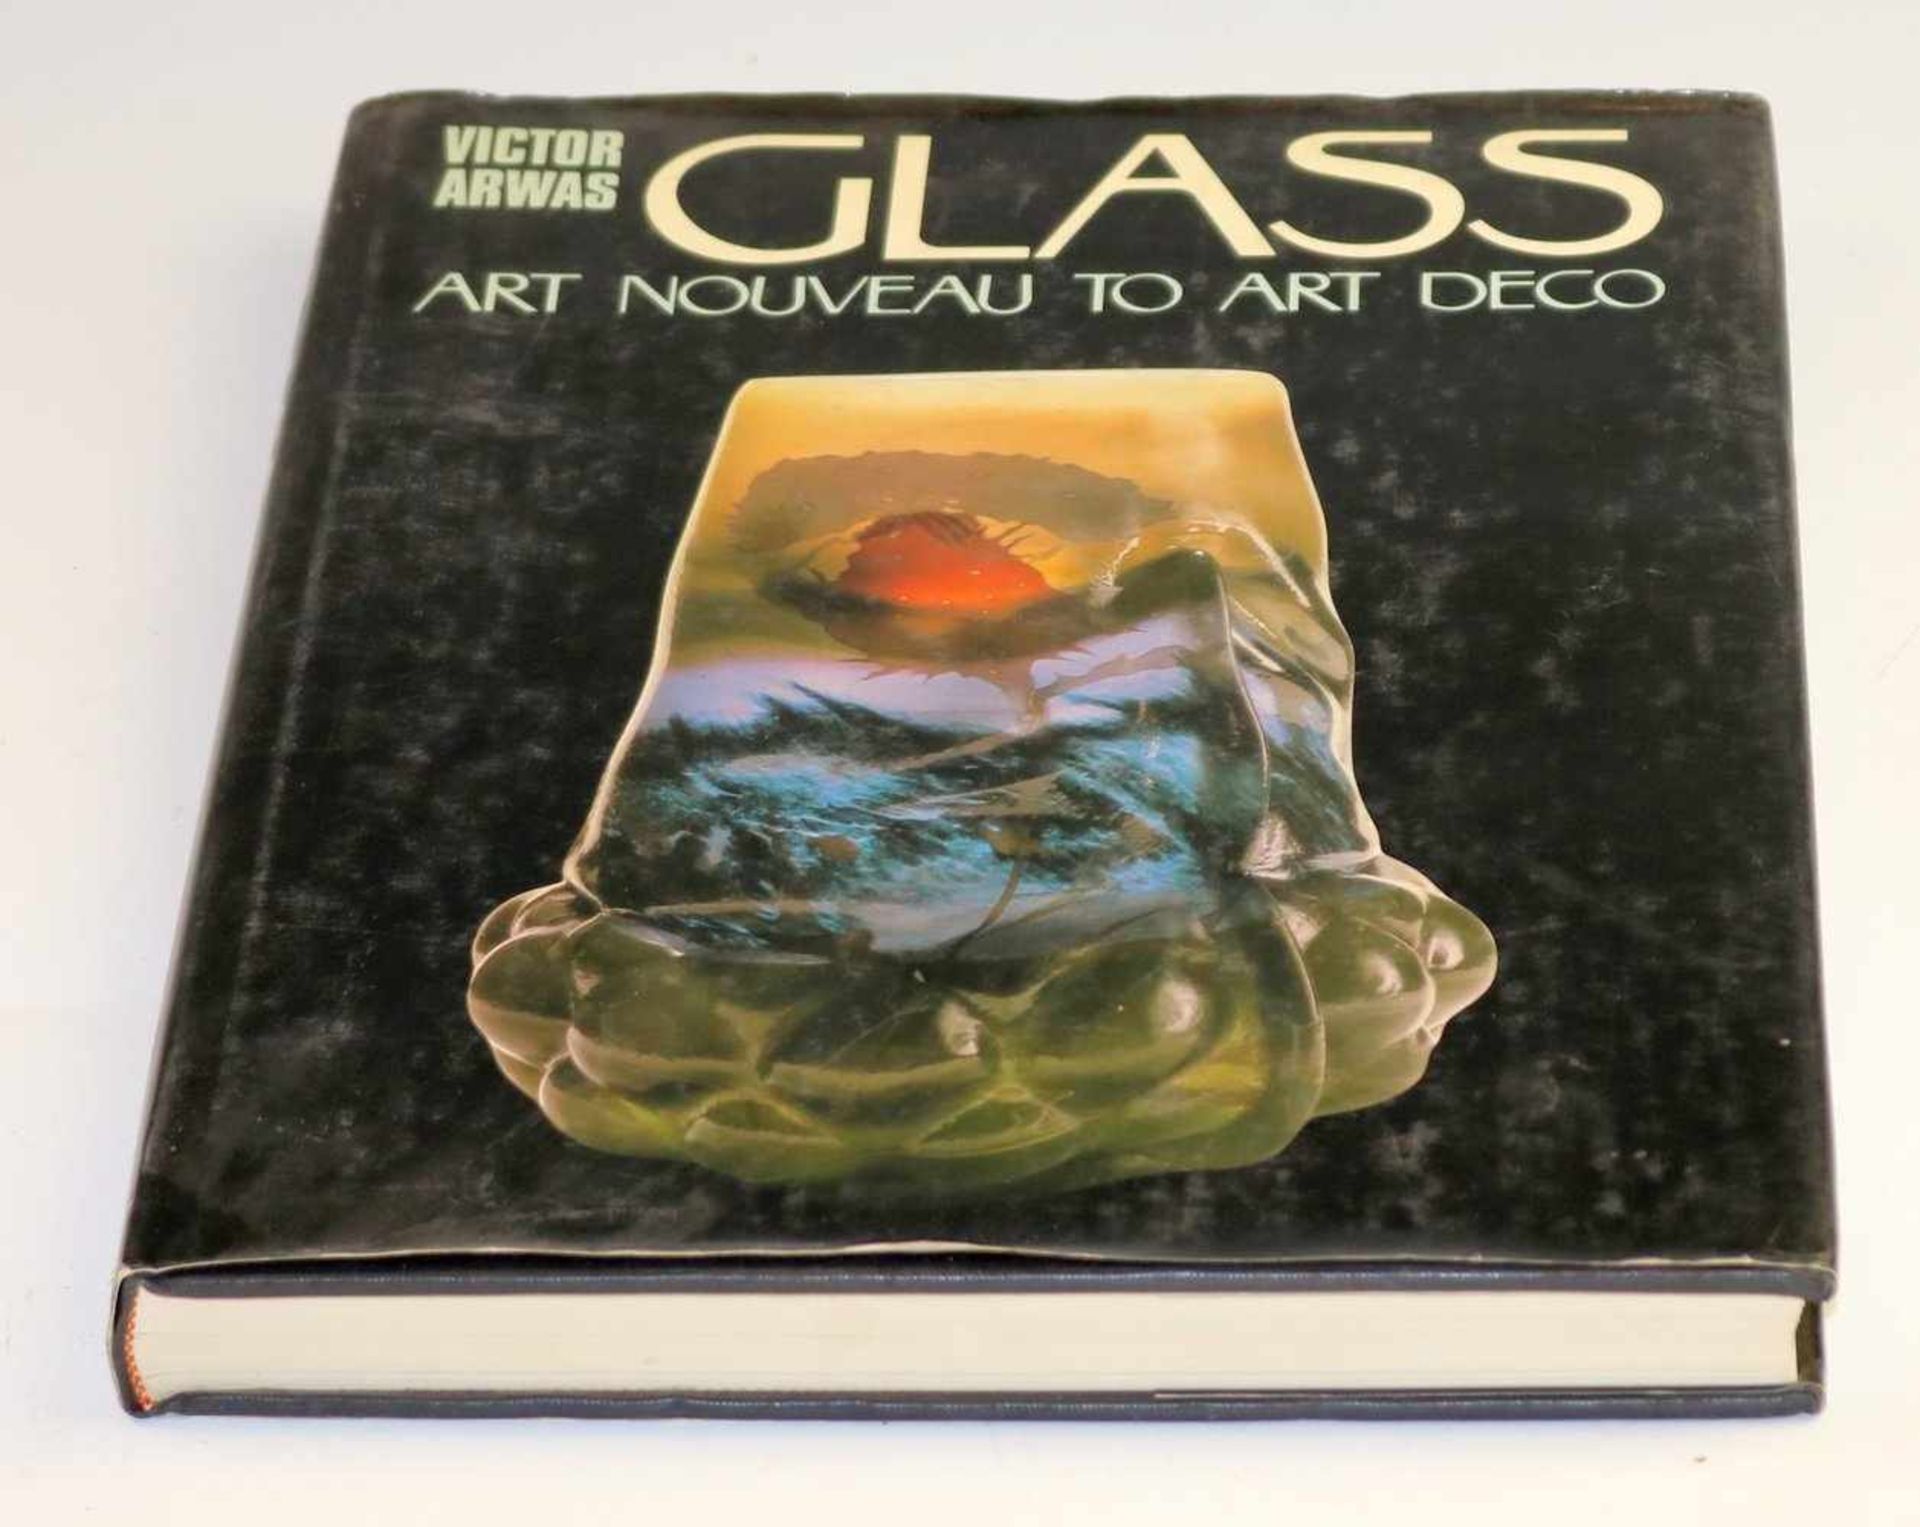 Arwas, VictorGlassArt Nouveau to Art Deco. Verl. Academy Editions, London 1980 (2. Aufl.). 256 S.